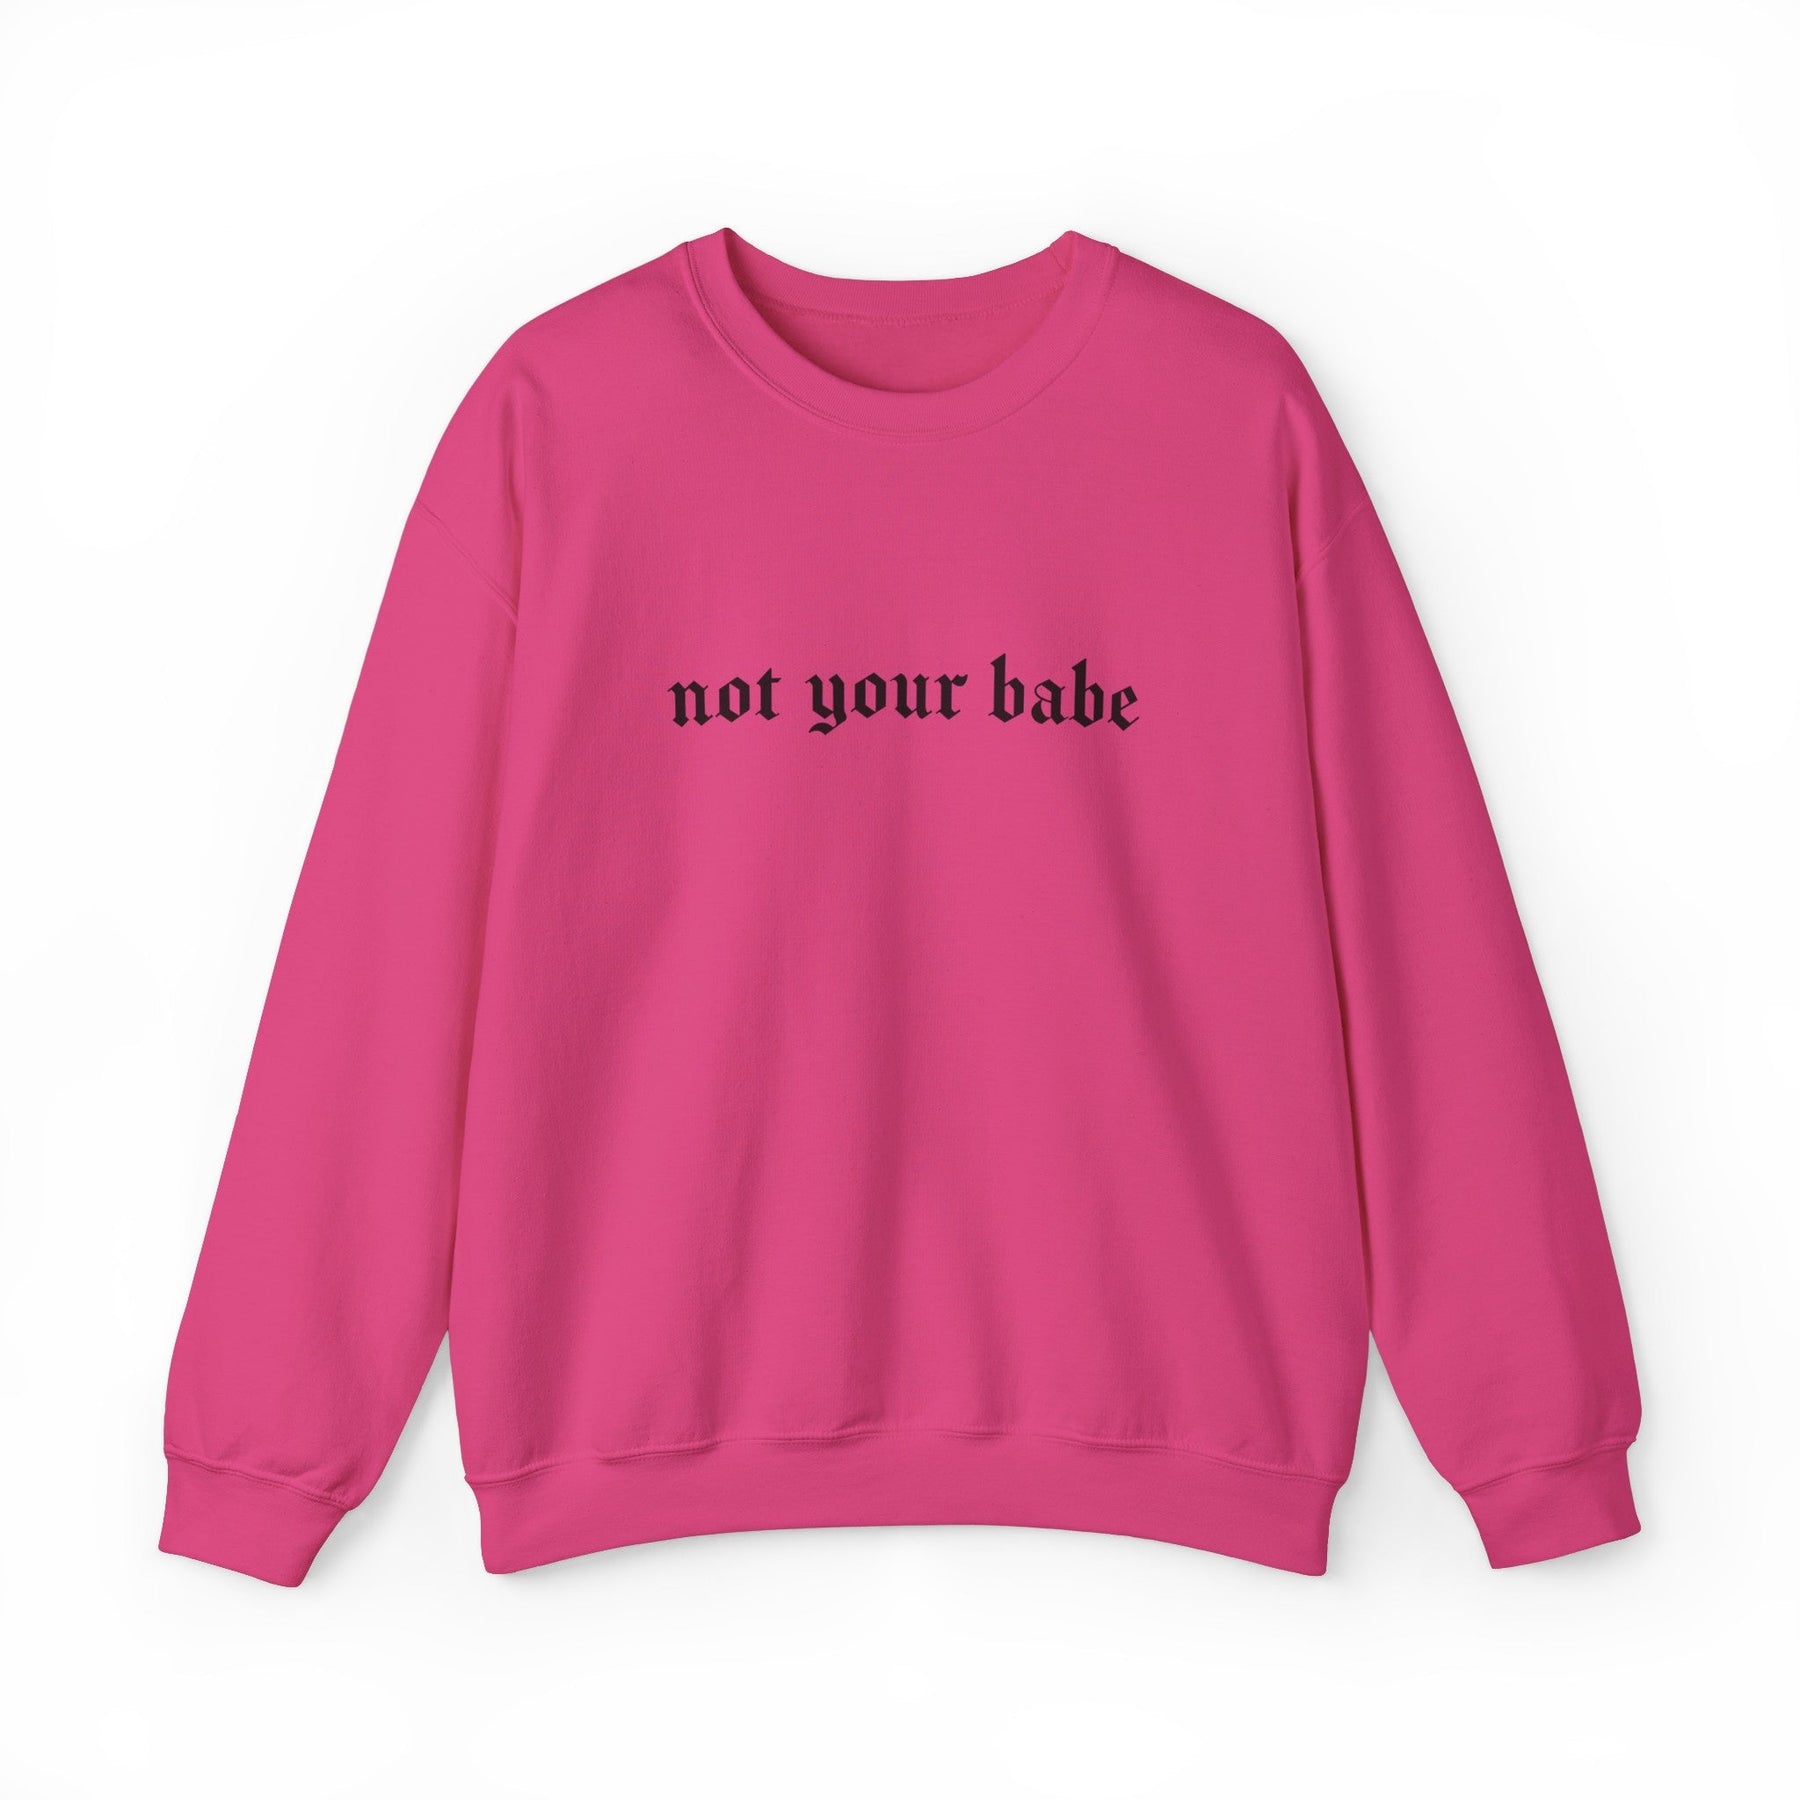 Not Your Babe Classic Goth Crew Neck Sweatshirt - Goth Cloth Co.Sweatshirt83706768186625667433